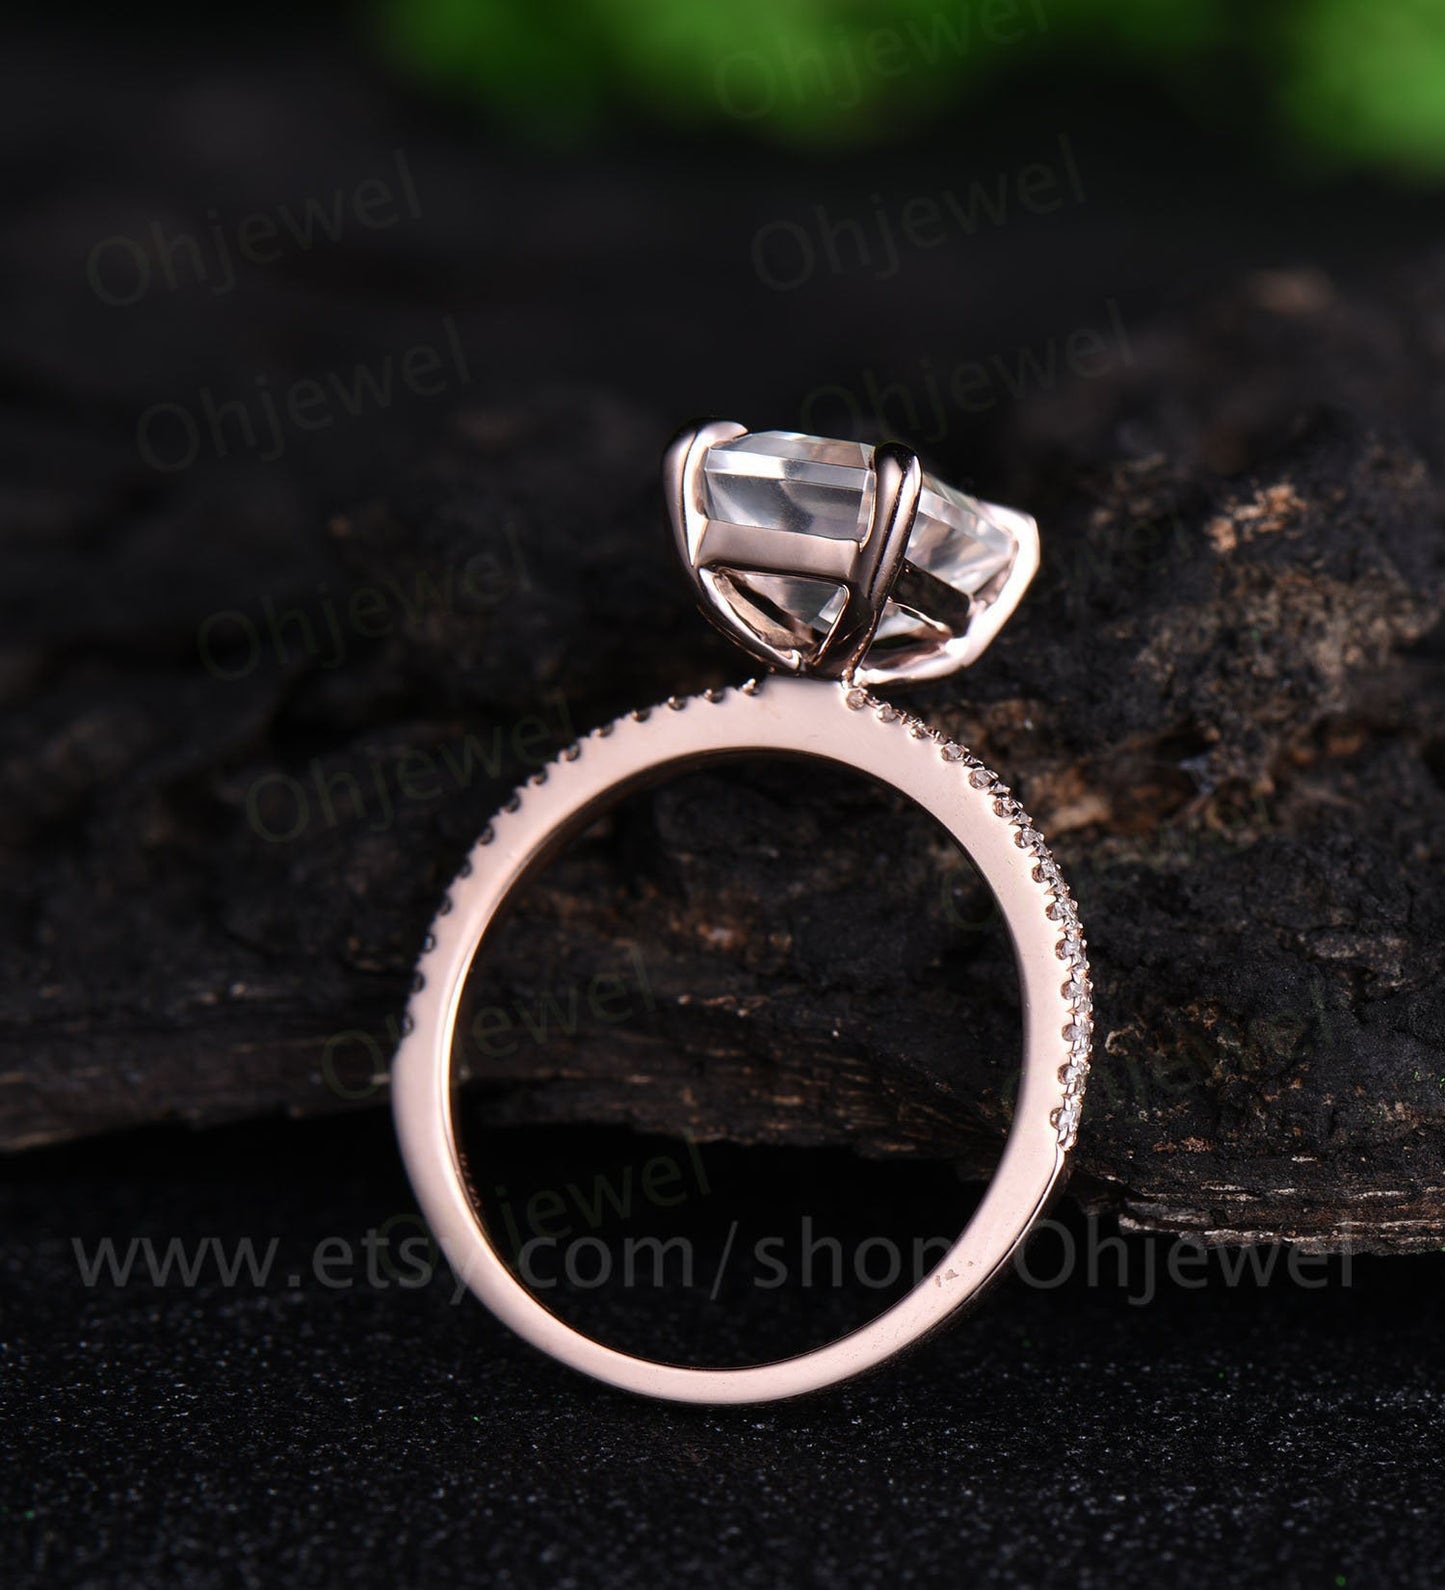 Emerald cut natural moonstone engagement ring vintage diamond ring rose gold half eternity wedding ring June birthstone ring jewelry gift